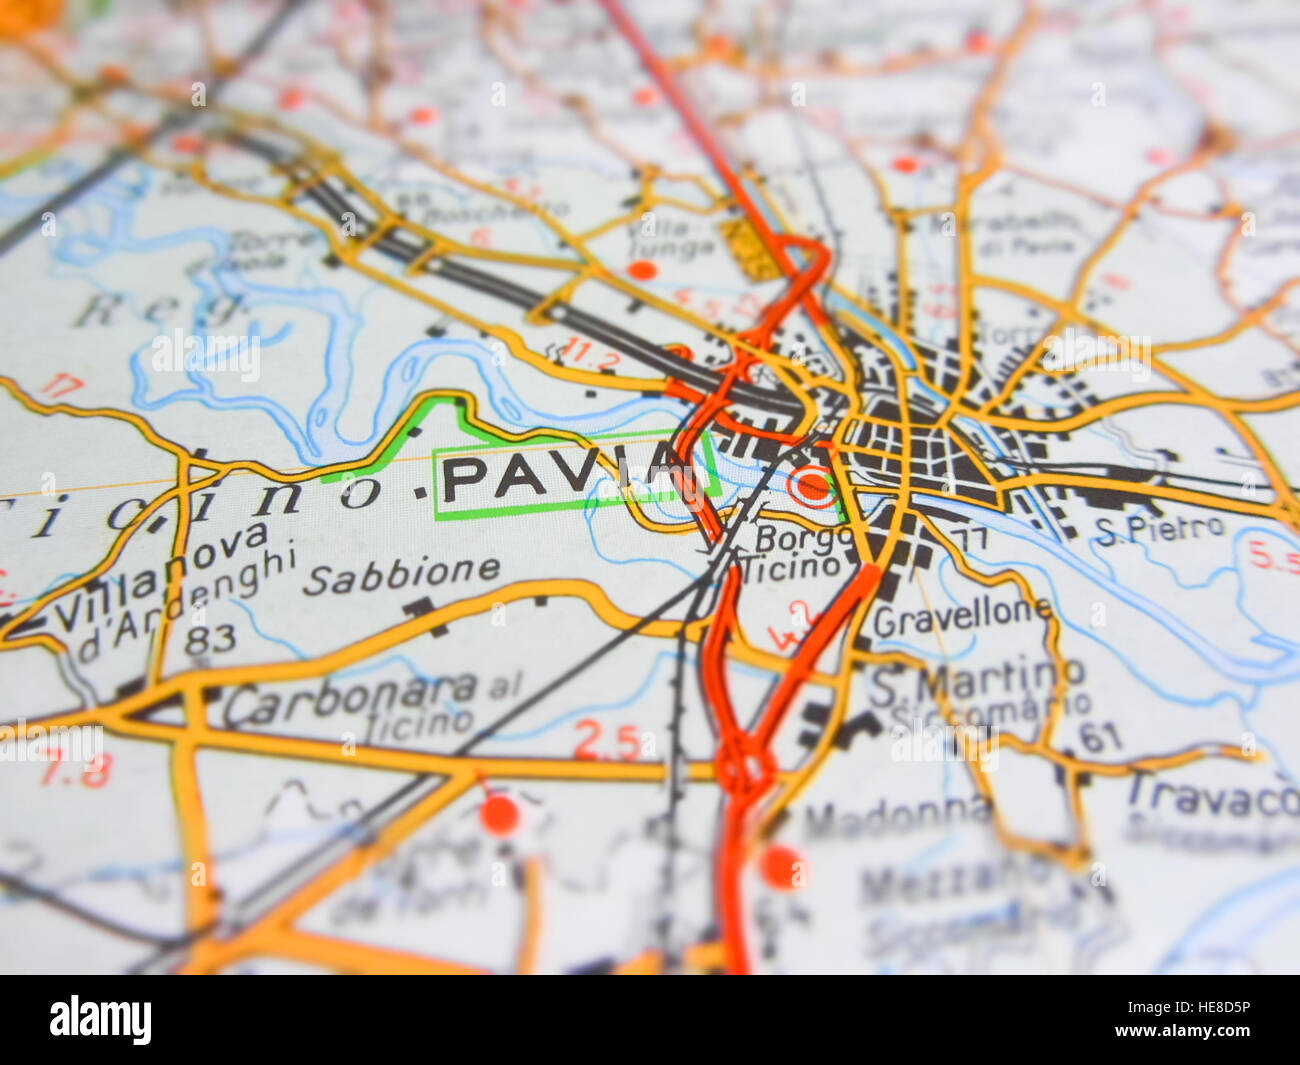 Pavia city over a road map (ITALY) Stock Photo